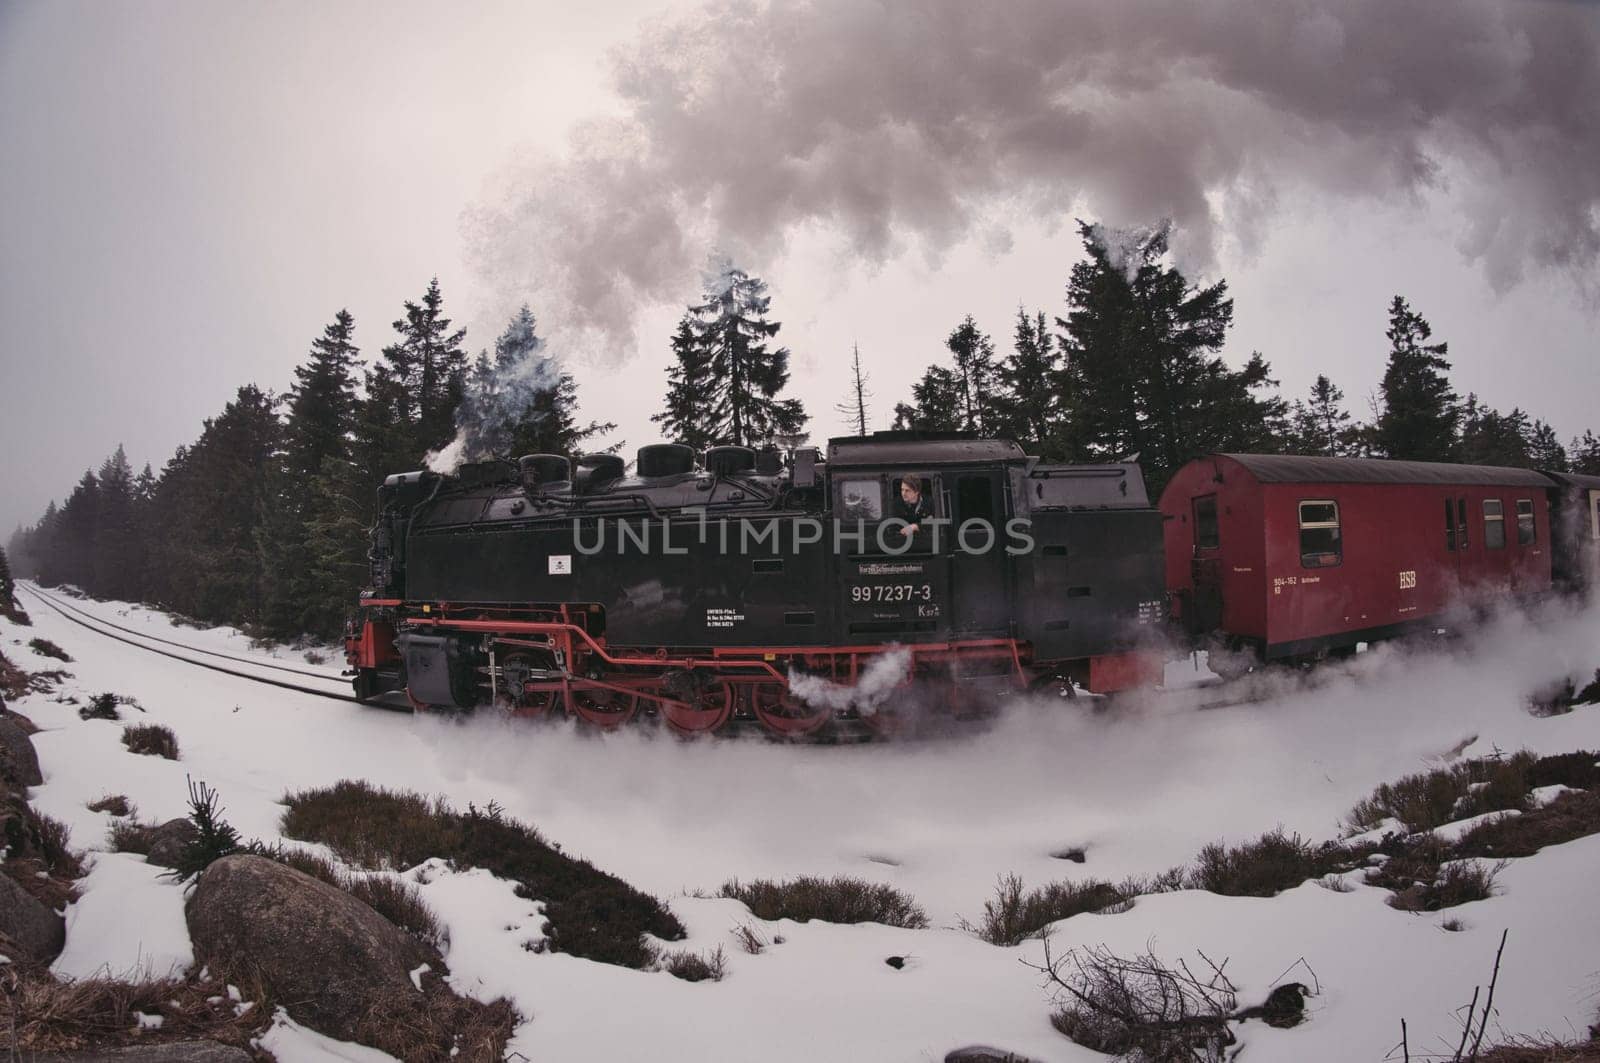 Steam locomotive narrow gauge railway on the Brocken mountain in the Harz mountains in Germany by rherrmannde